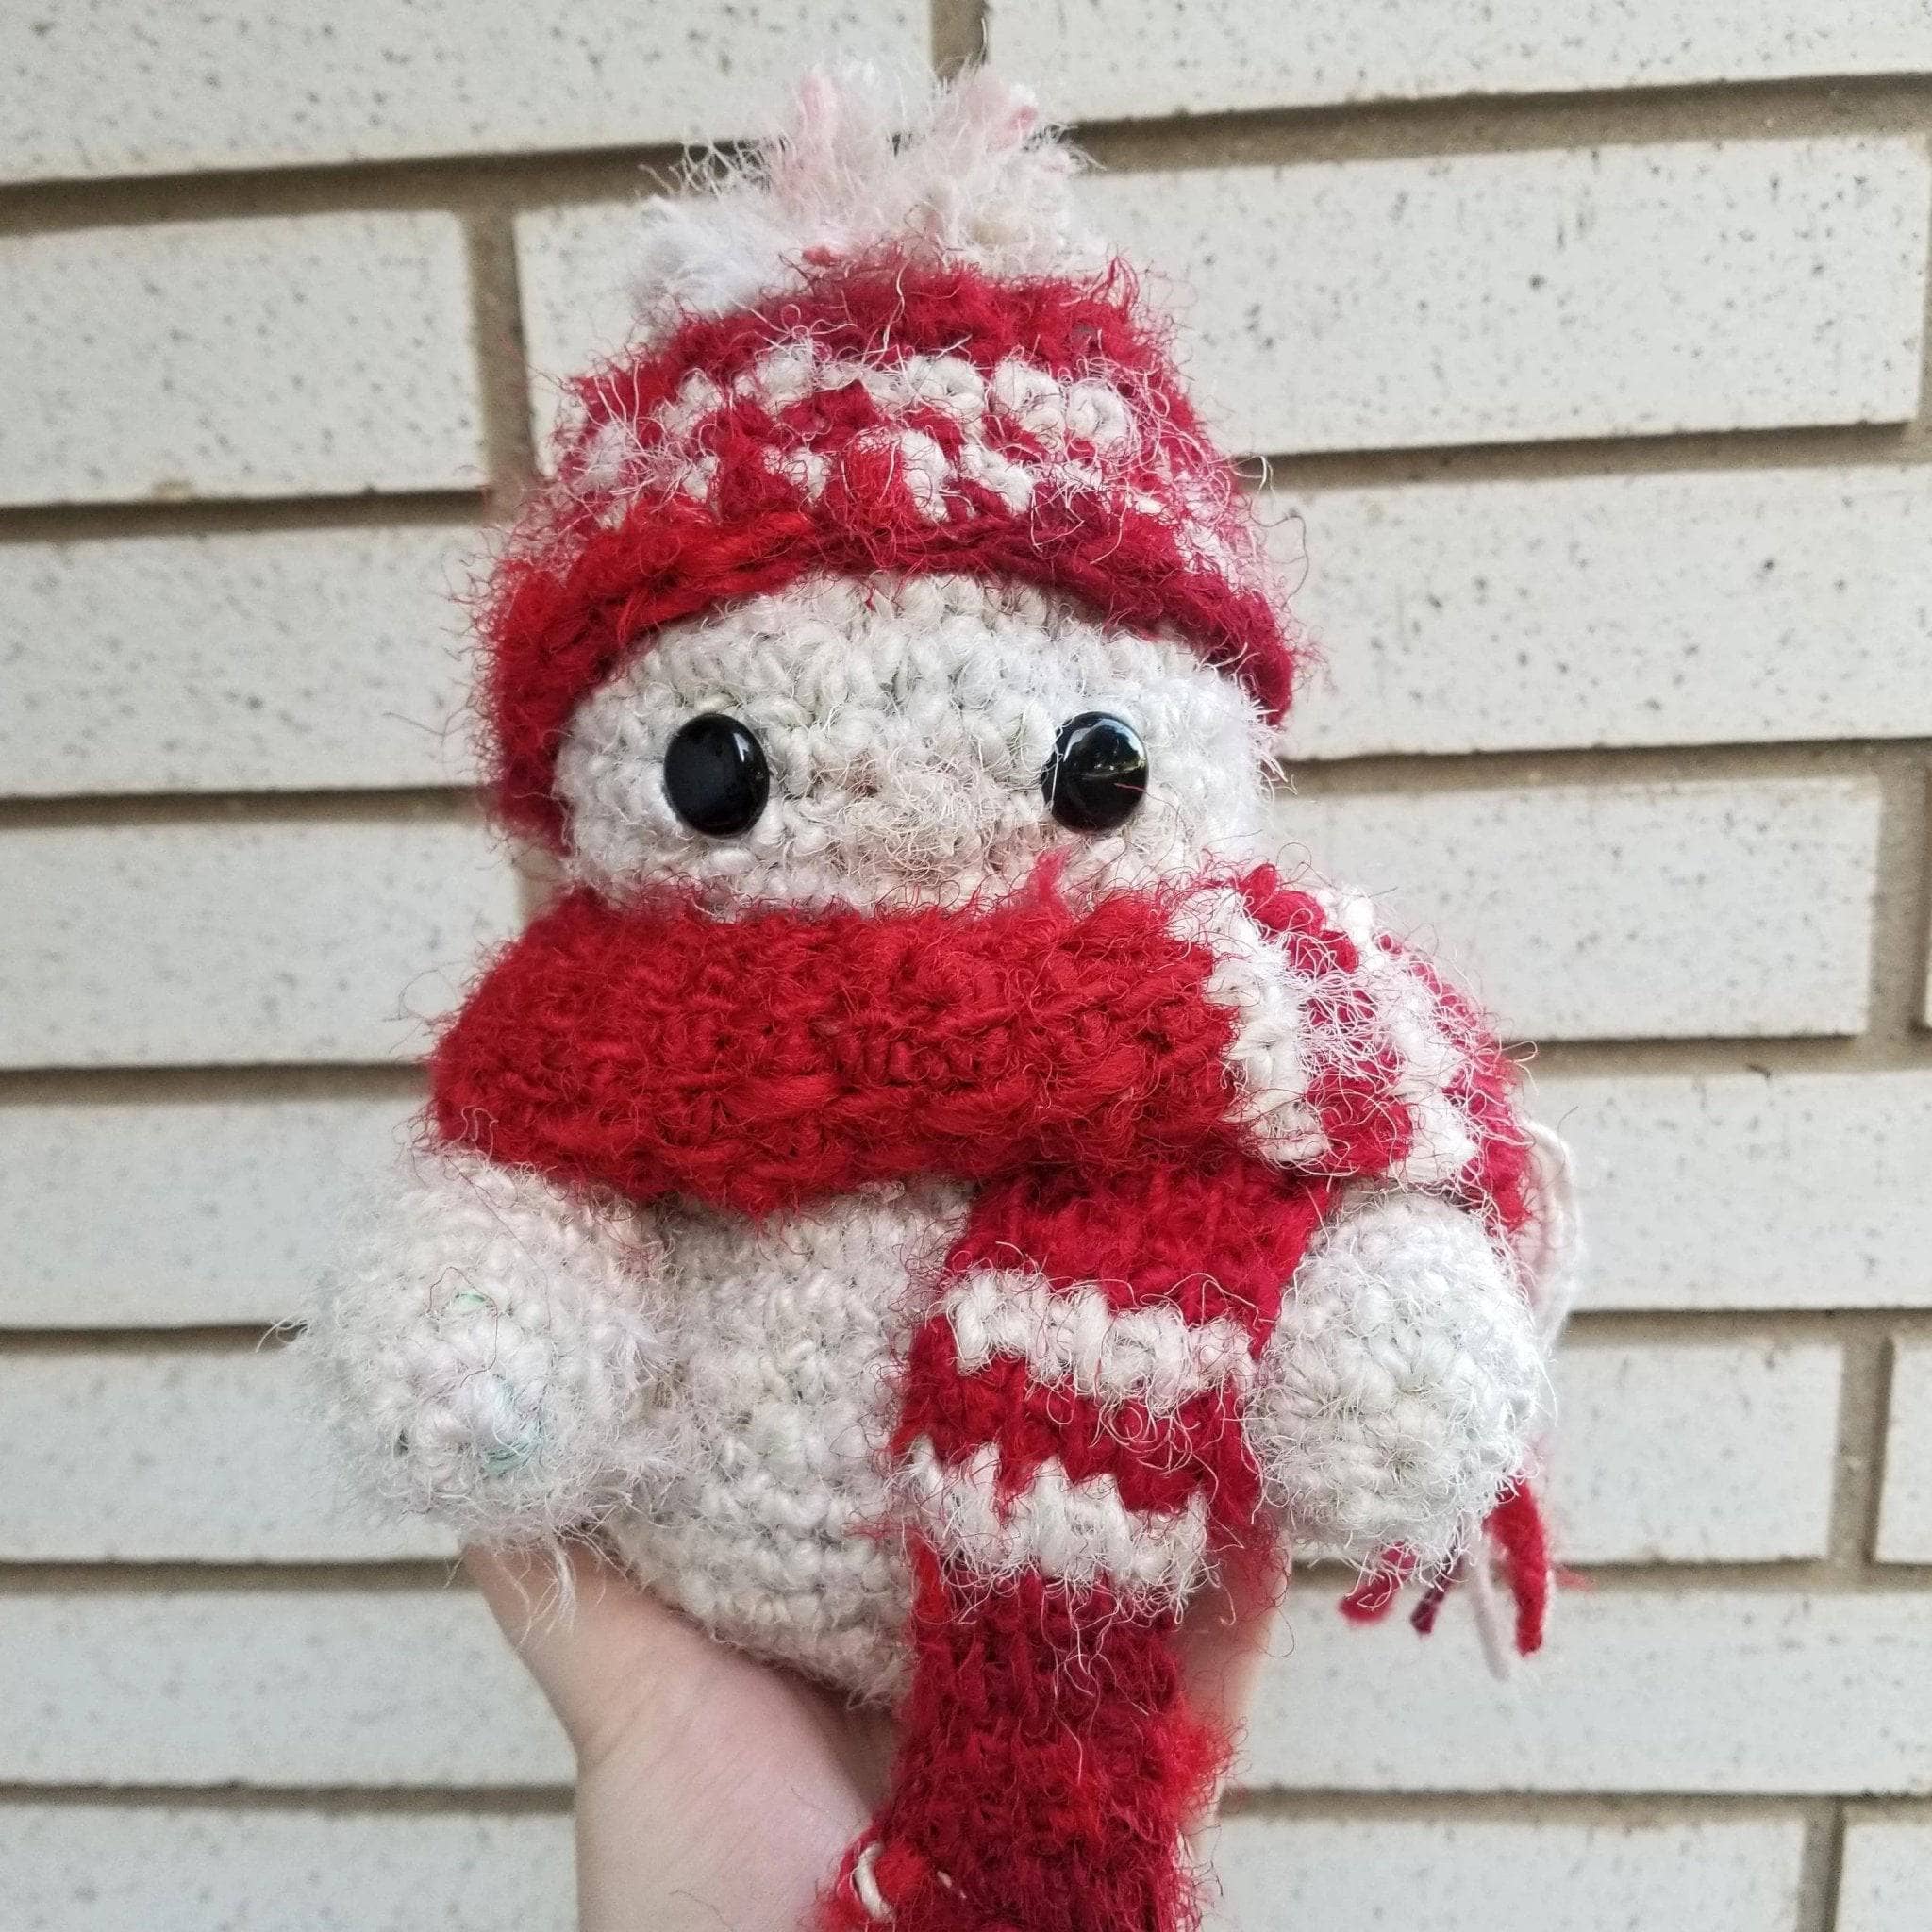 New Crochet Kit for Beginners with Crochet Yarn - Christmas Snowman  Amigurumi